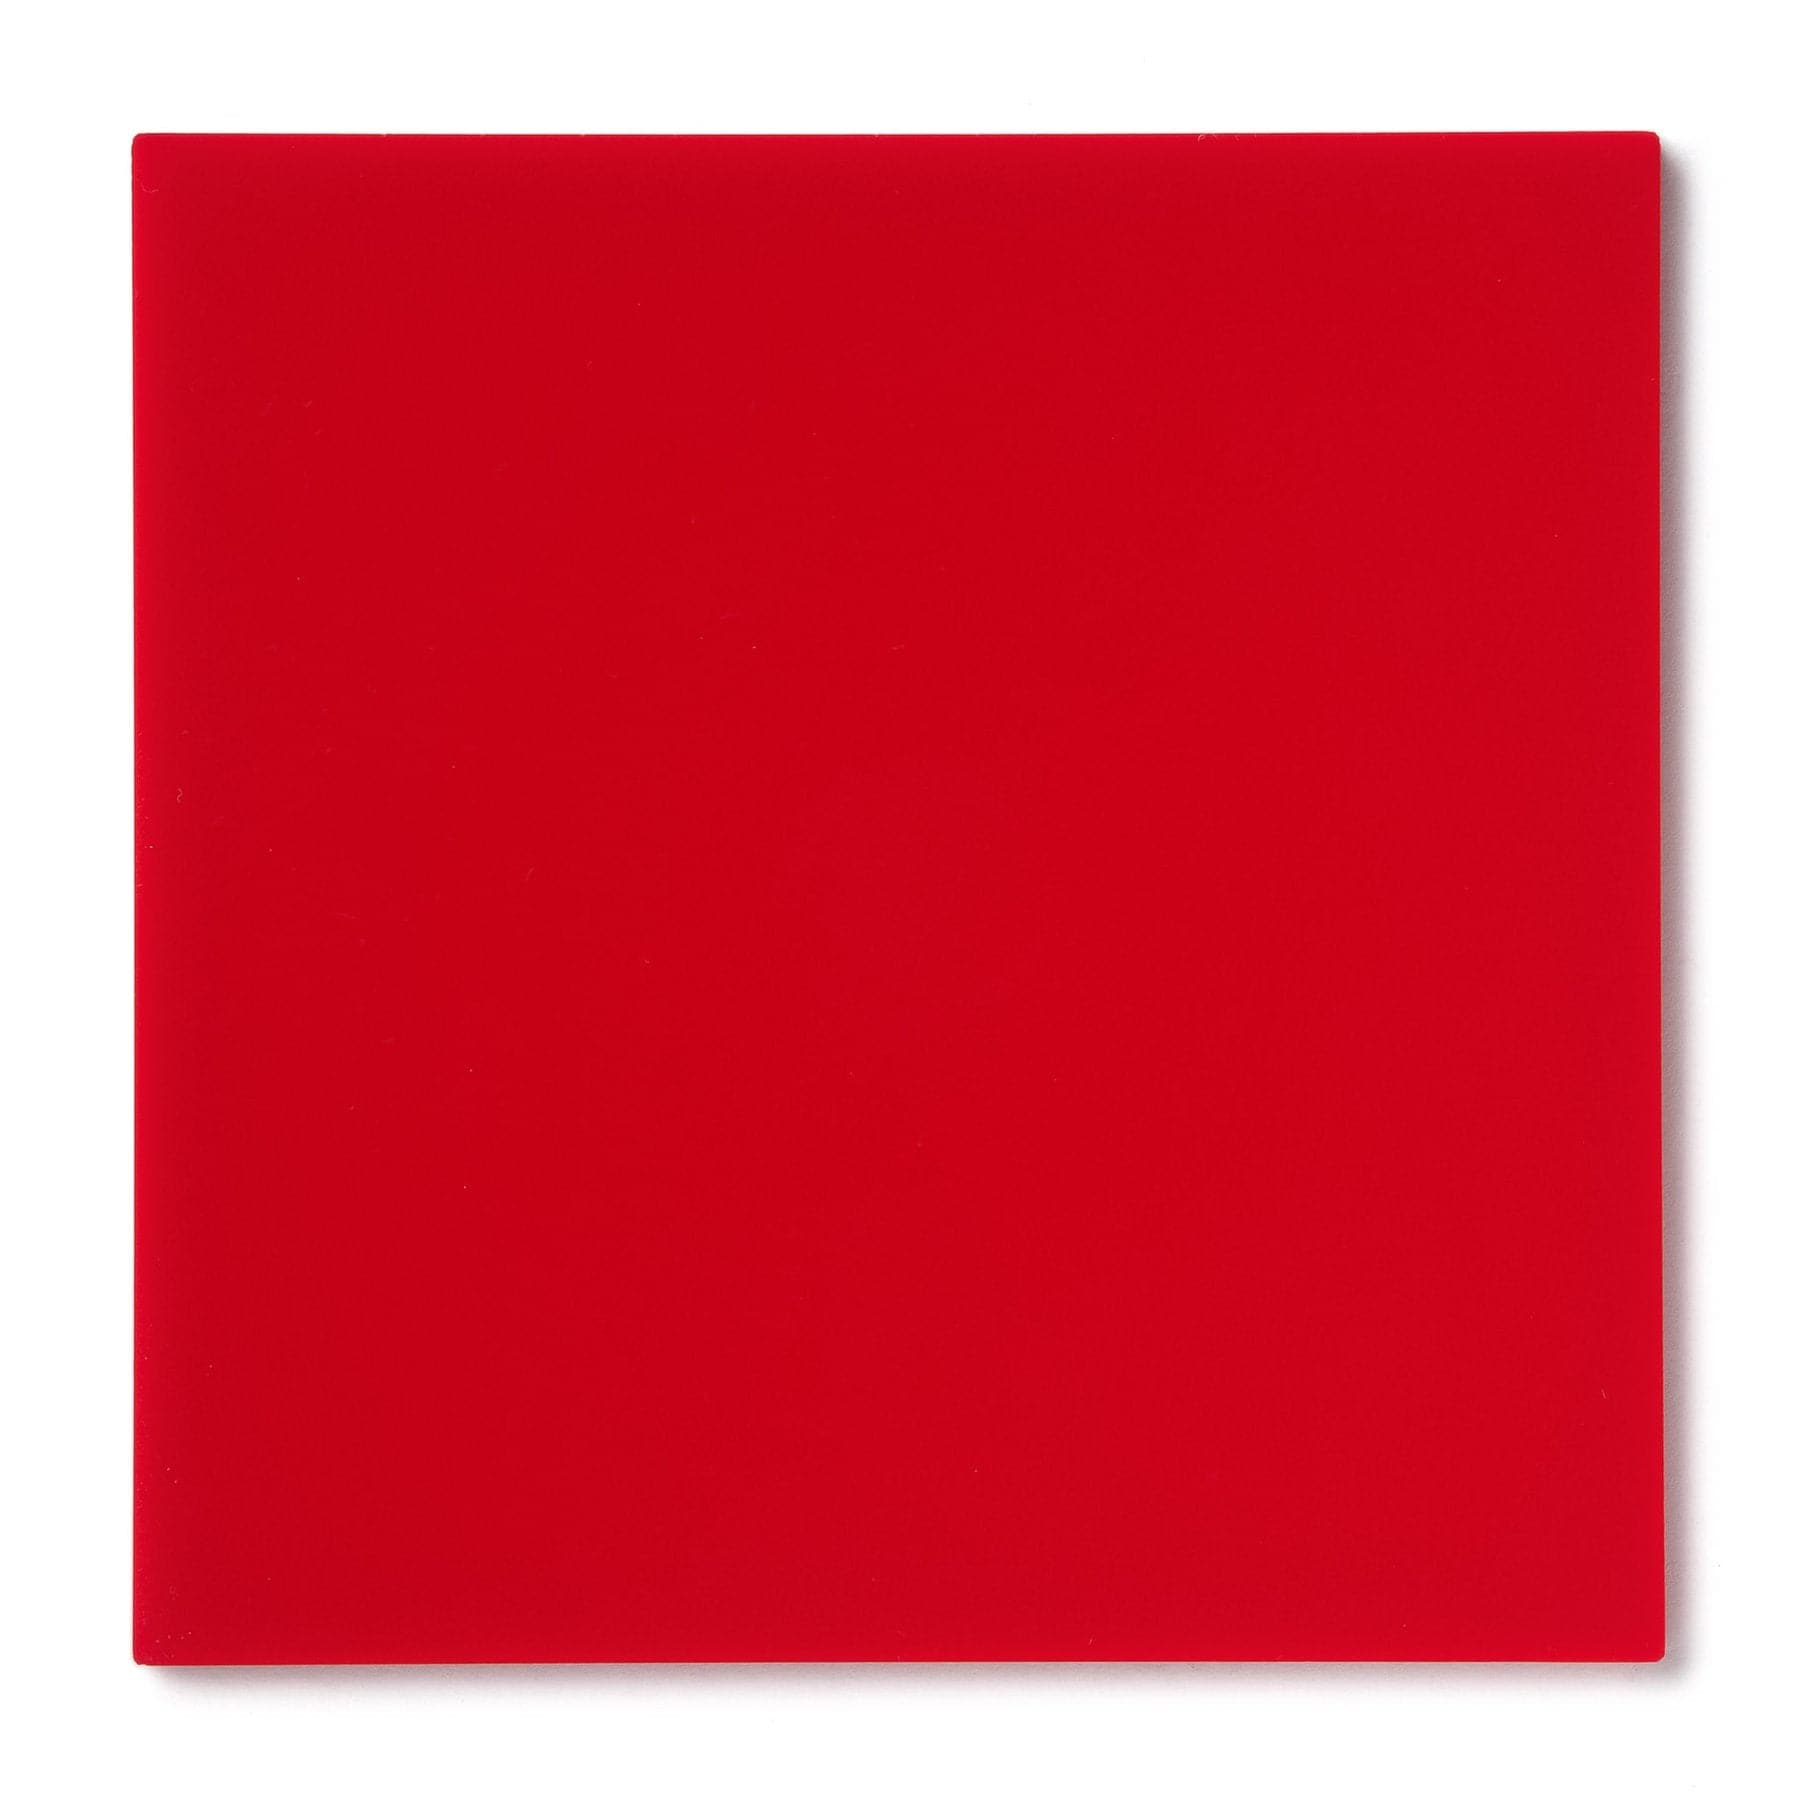 Acrylic Sheet 1/8" Dark Red Translucent #2157